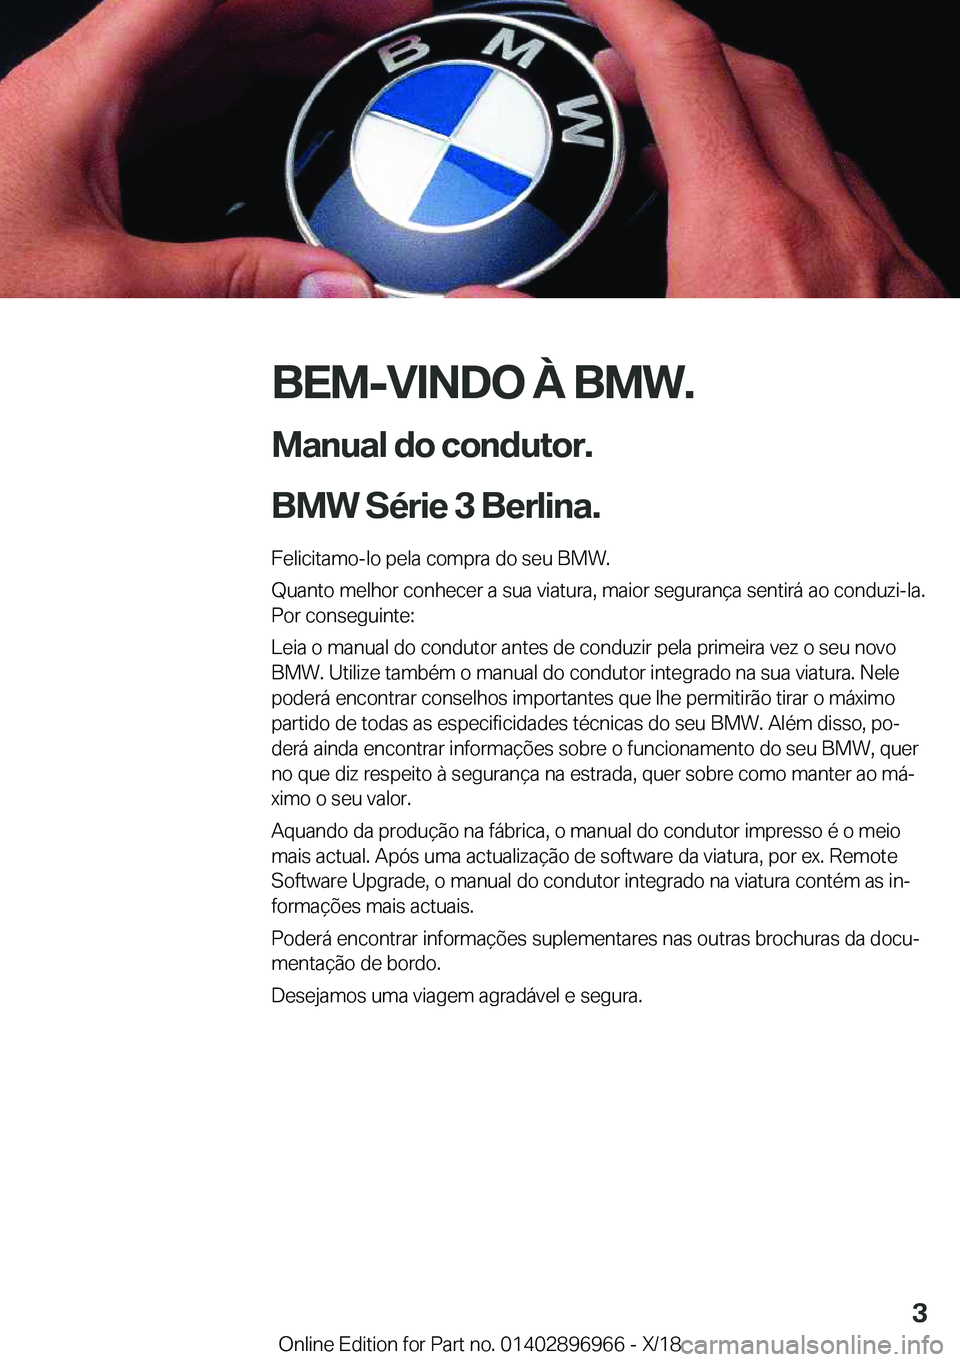 BMW 3 SERIES 2019  Manual do condutor (in Portuguese) �B�E�M�-�V�I�N�D�O��À��B�M�W�.
�M�a�n�u�a�l��d�o��c�o�n�d�u�t�o�r�.
�B�M�W��S�é�r�i�e��3��B�e�r�l�i�n�a�. �F�e�l�i�c�i�t�a�m�o�-�l�o��p�e�l�a��c�o�m�p�r�a��d�o��s�e�u��B�M�W�.
�Q�u�a�n�t